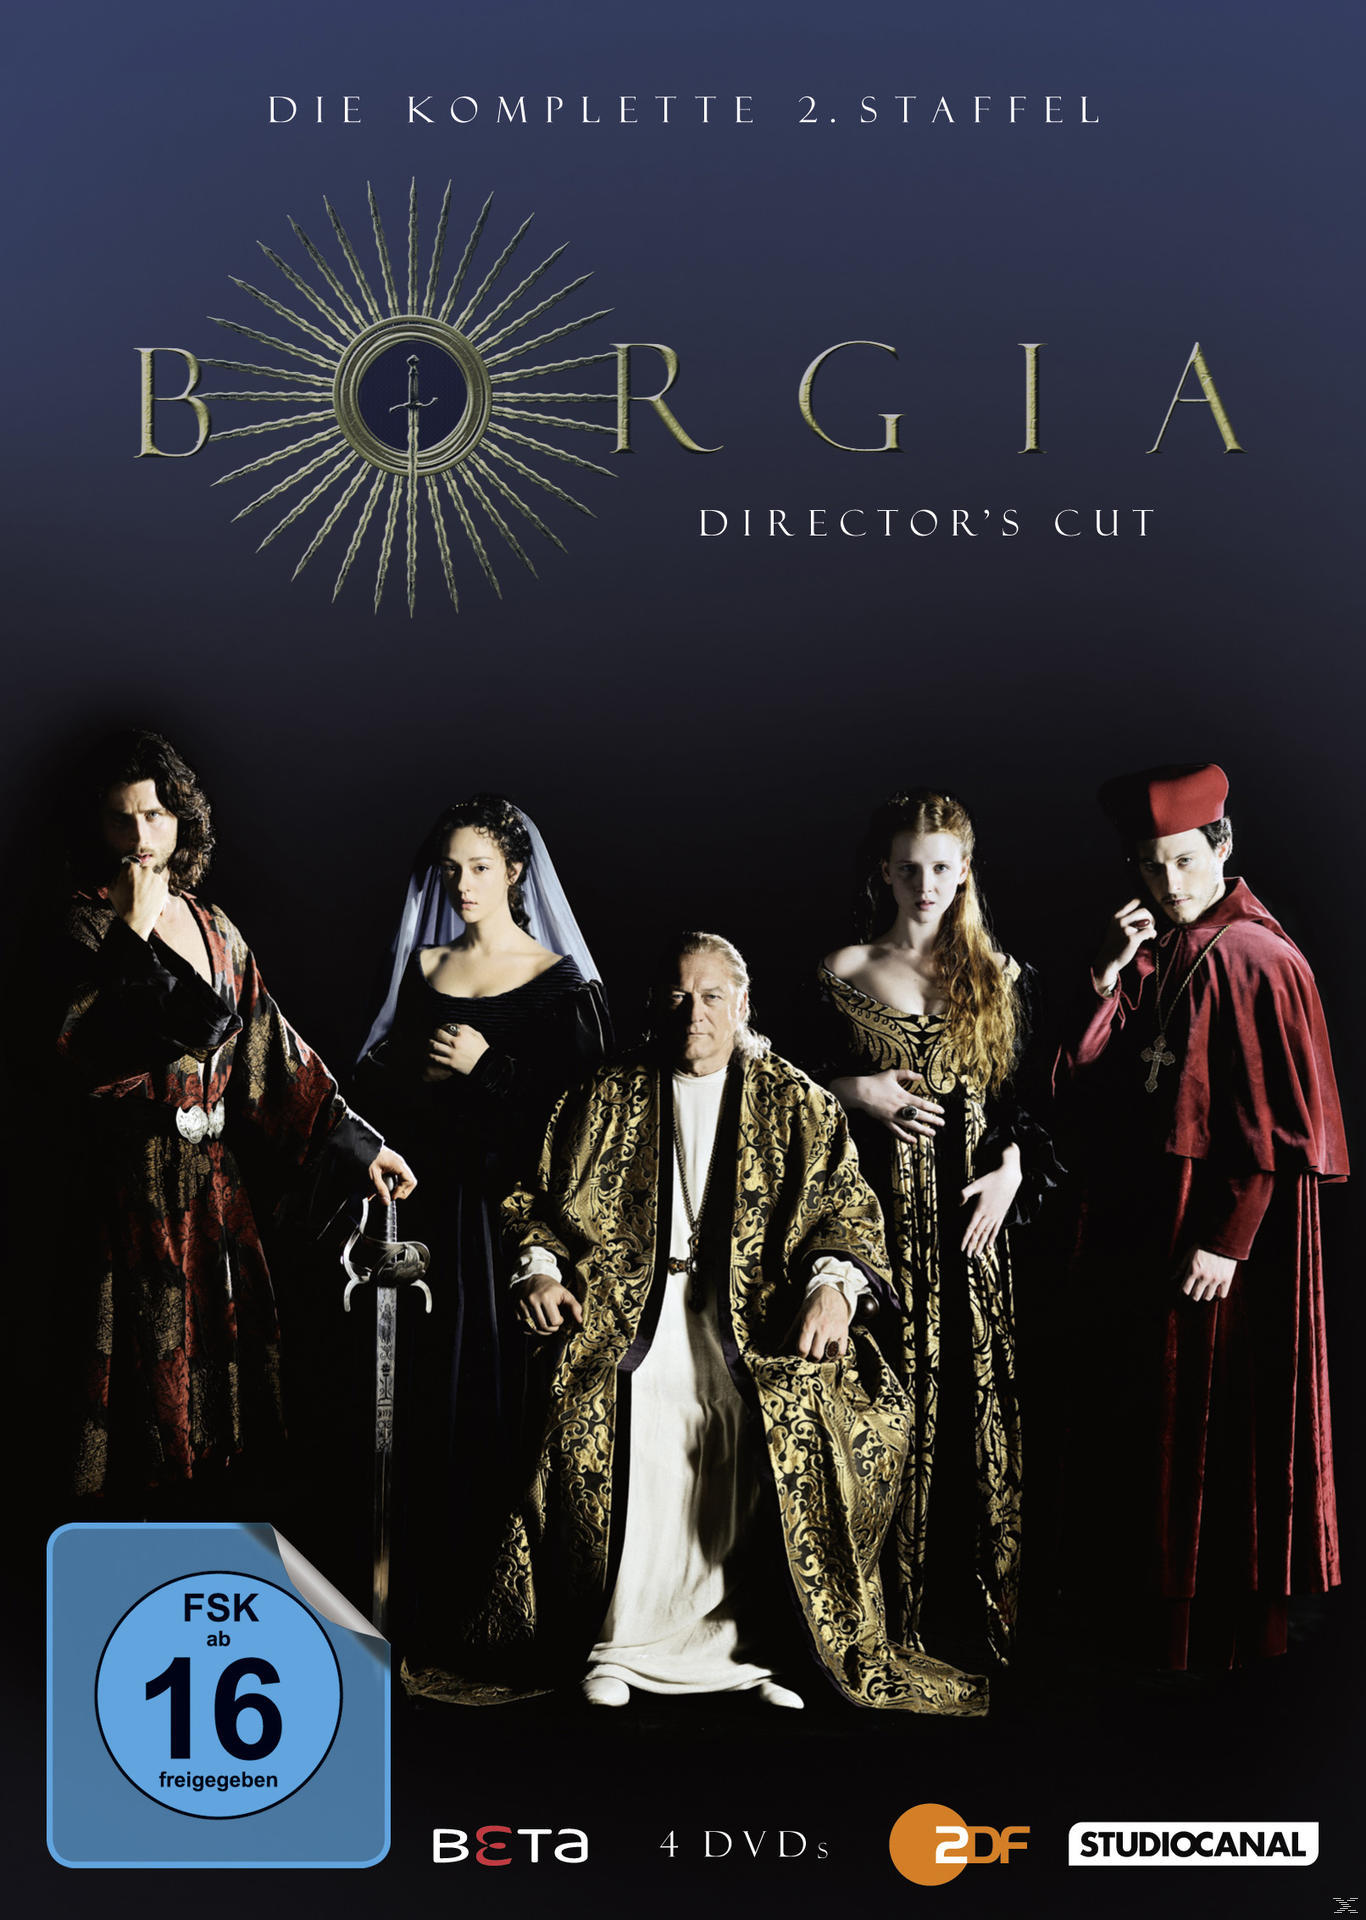 Cut) - DVD Borgia (Director’s 2 Staffel